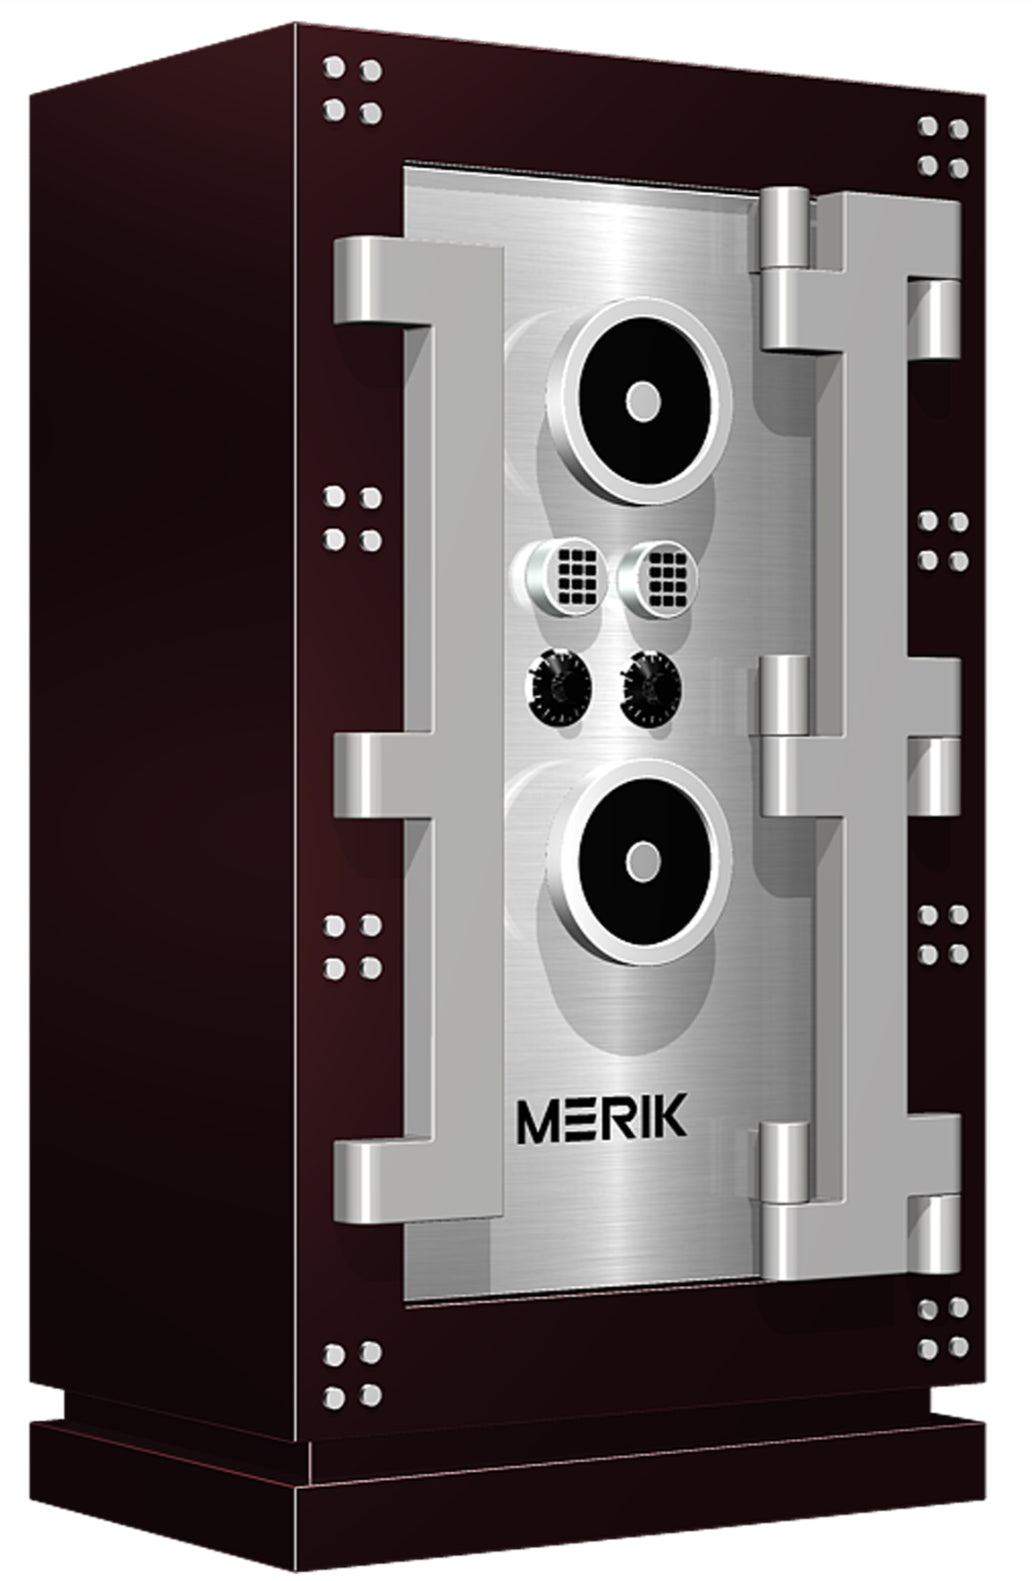 MERIK Safe unique safe designs